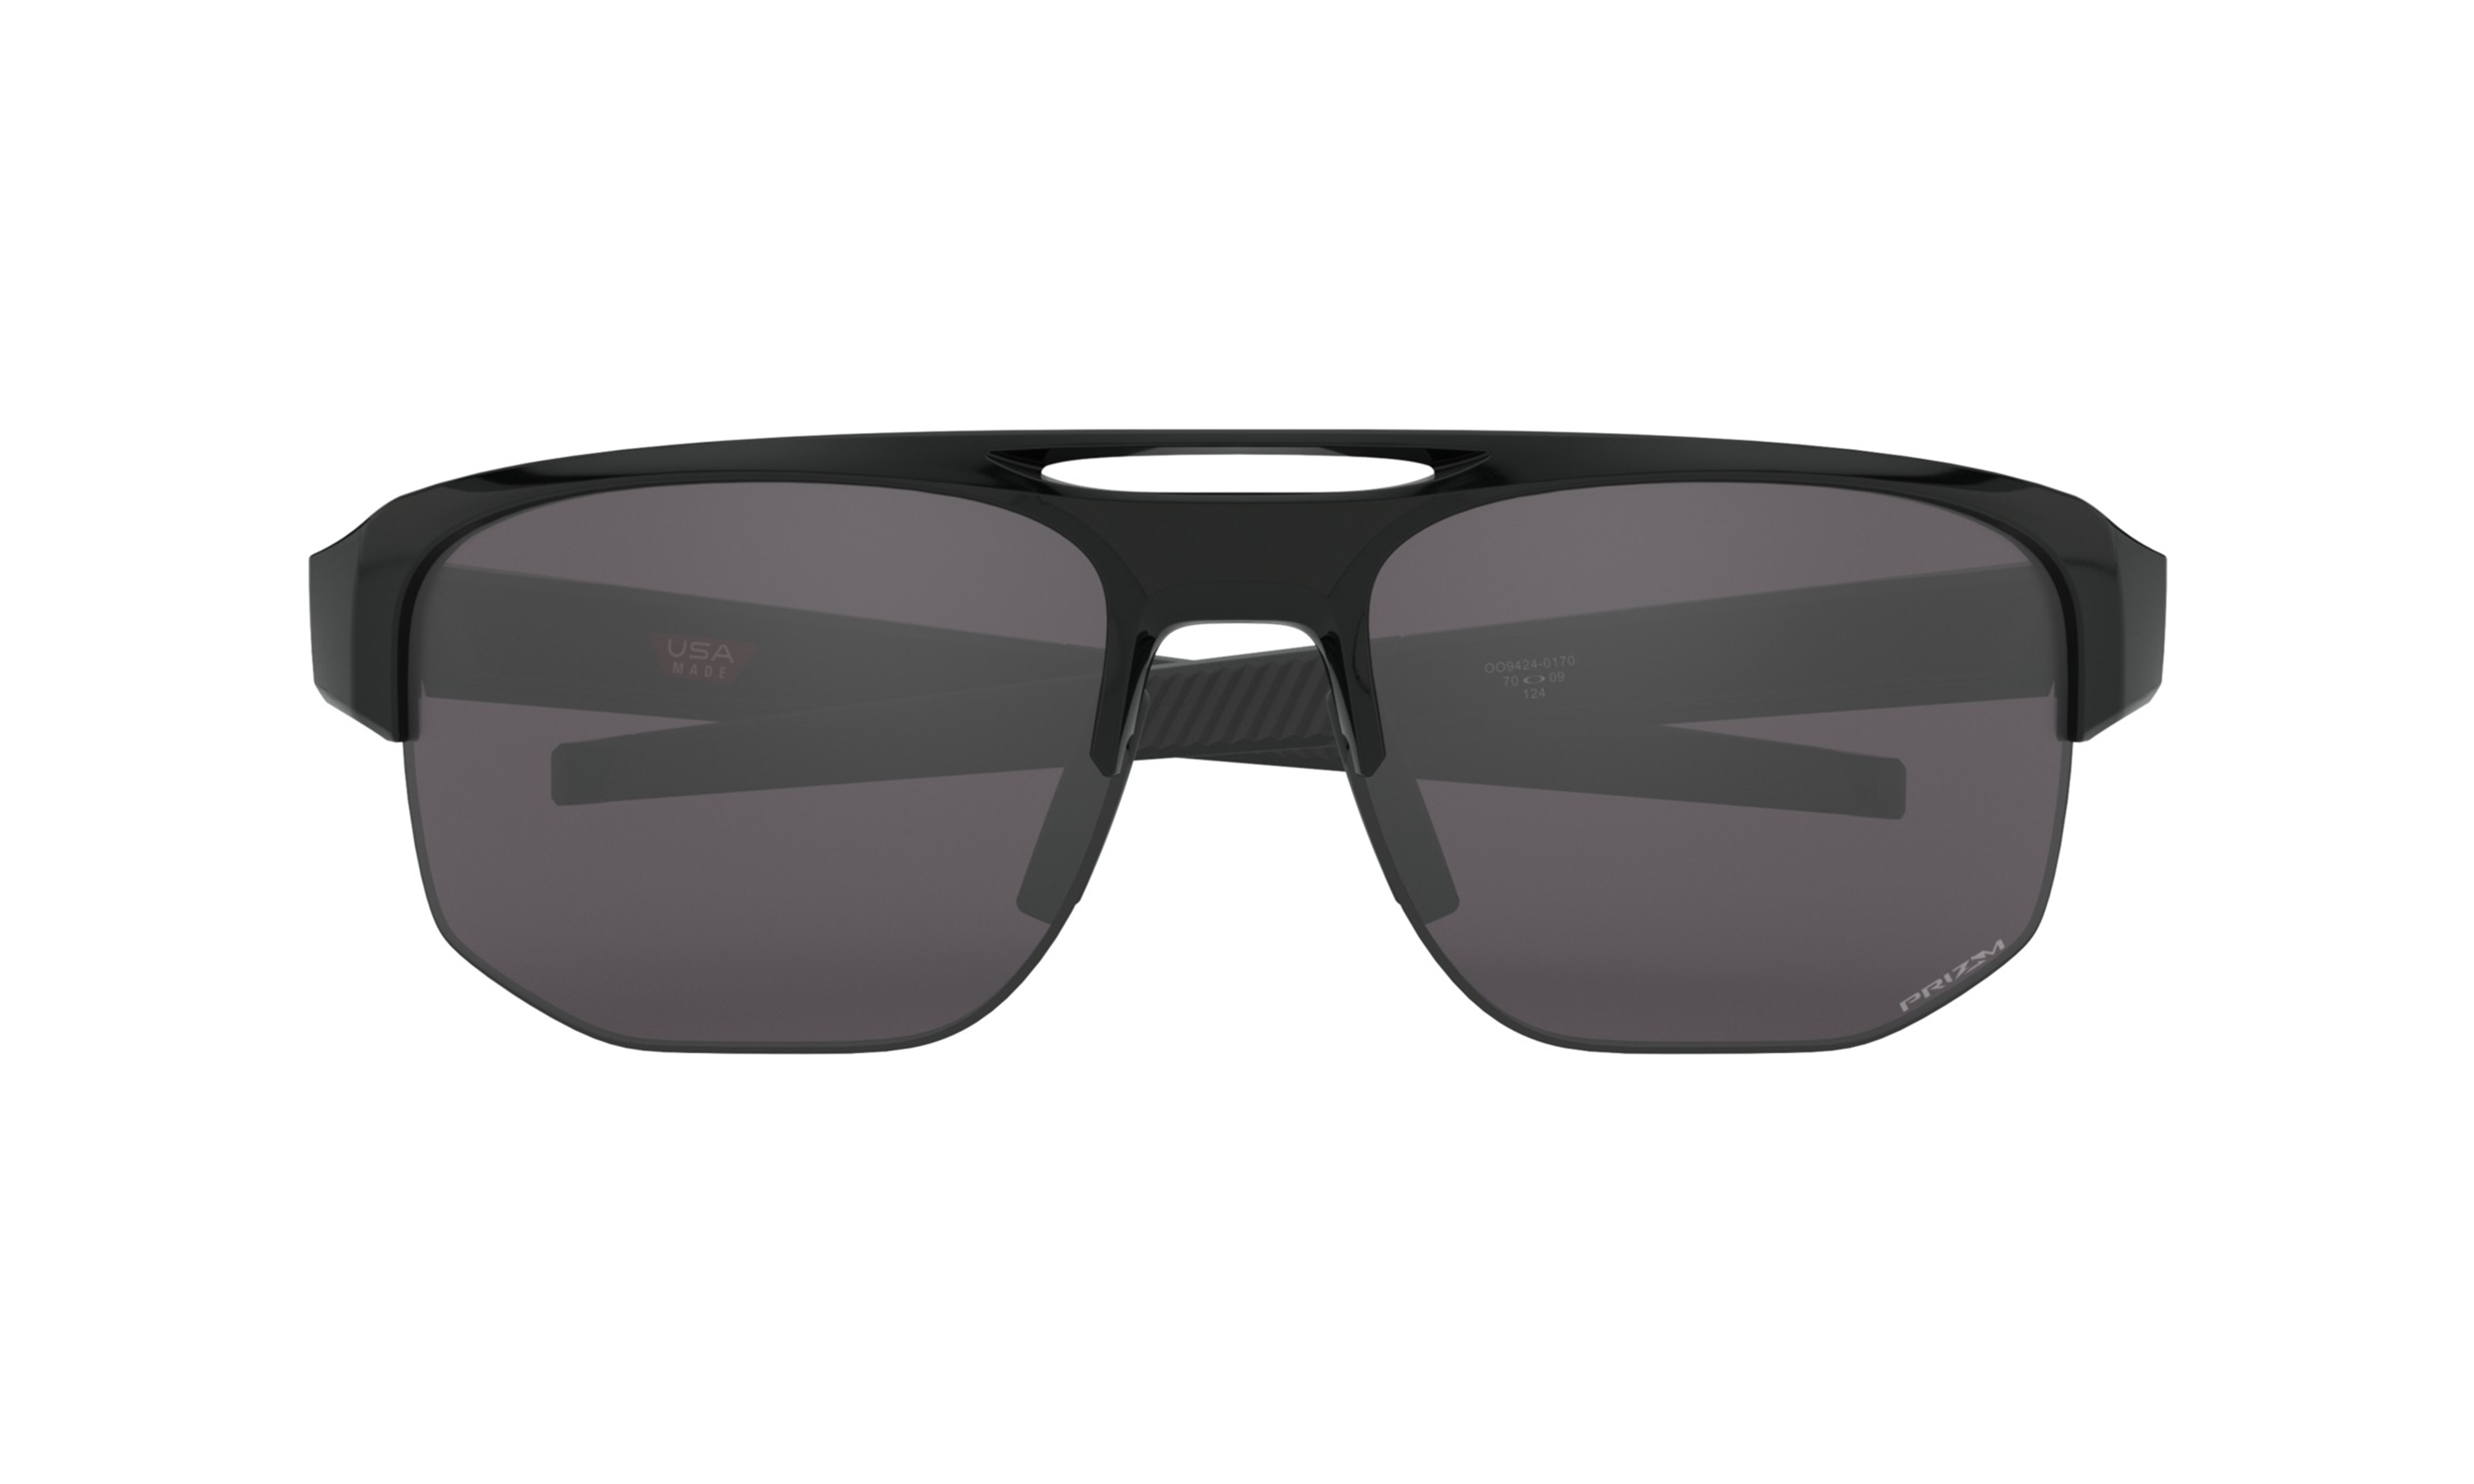 oakley prizm golf sunglasses review